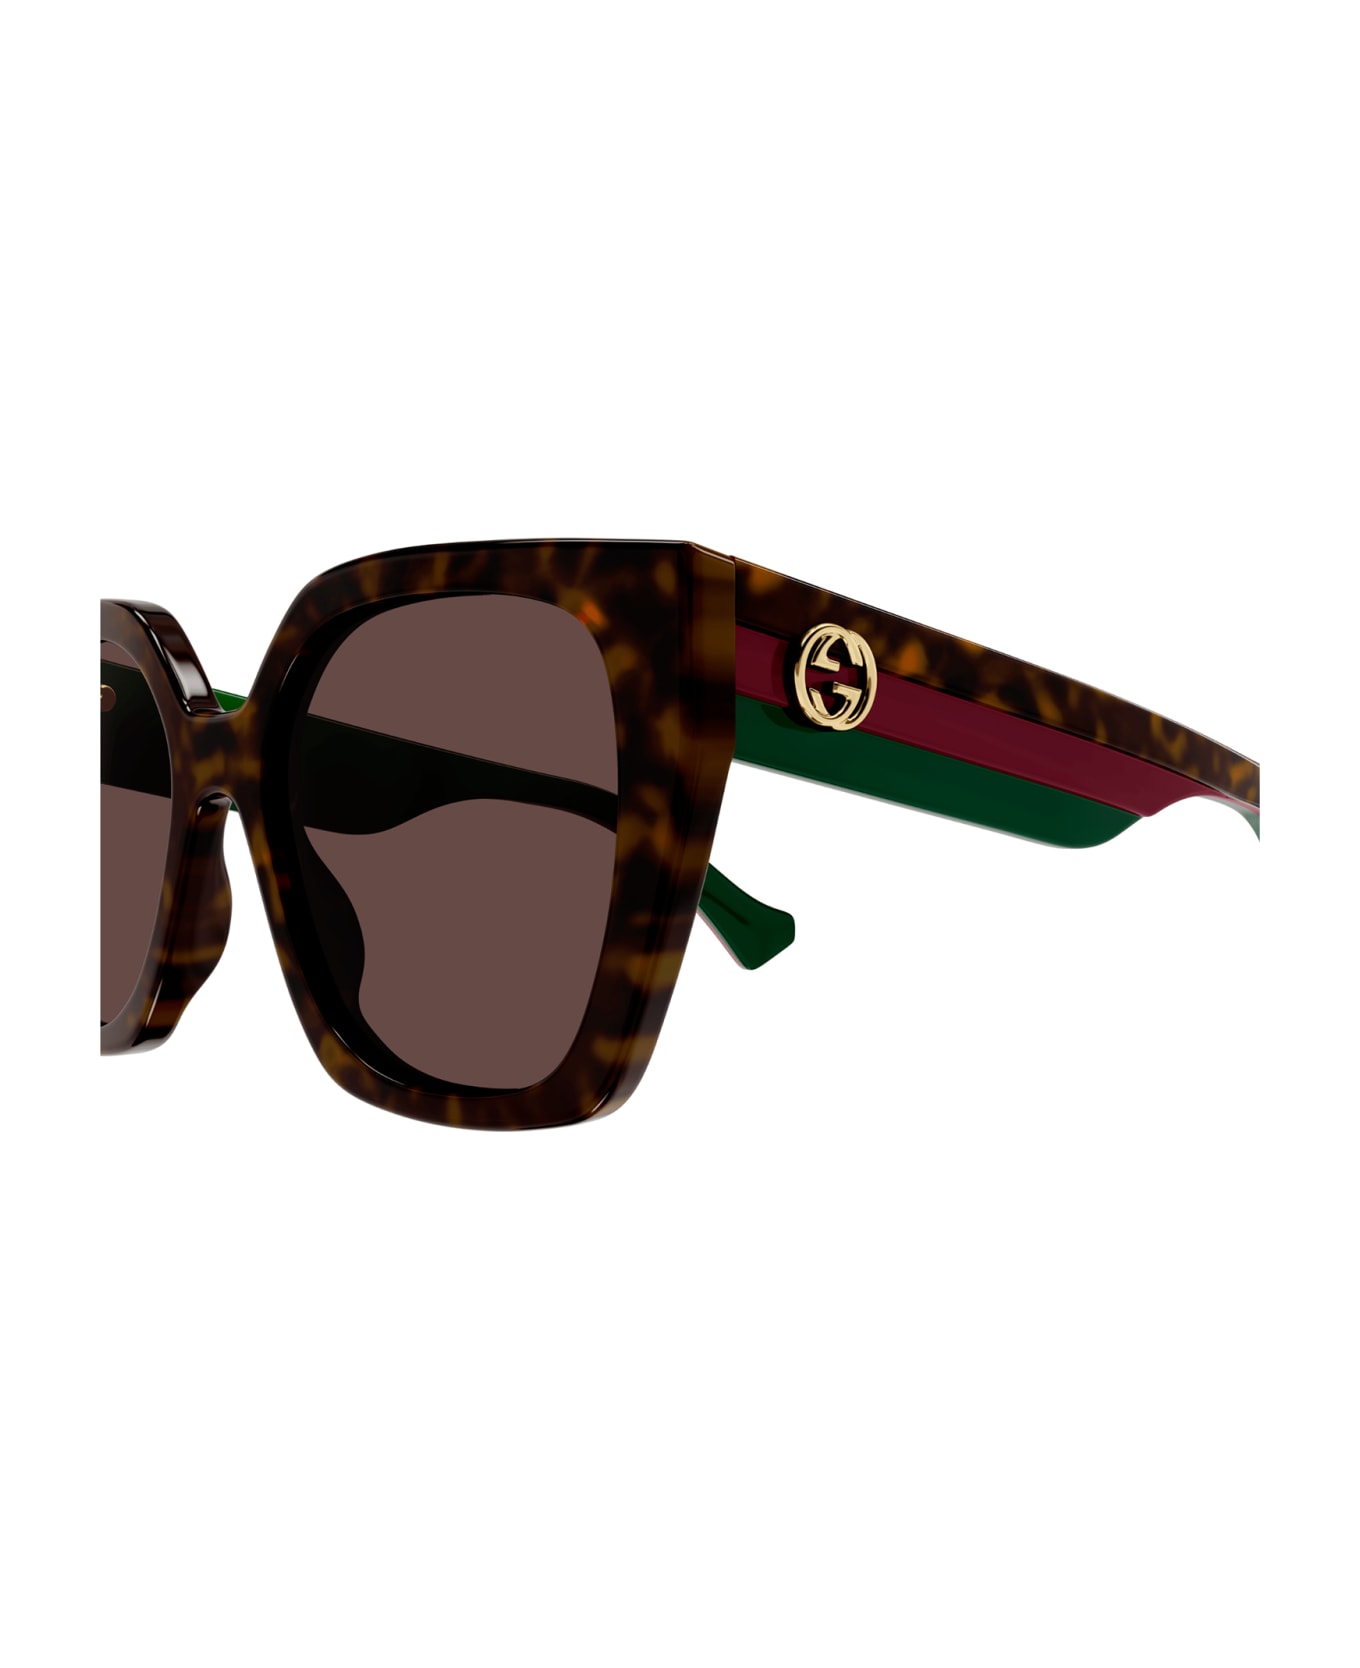 Gucci Eyewear Gg1300s Sunglasses - 002 havana havana brown